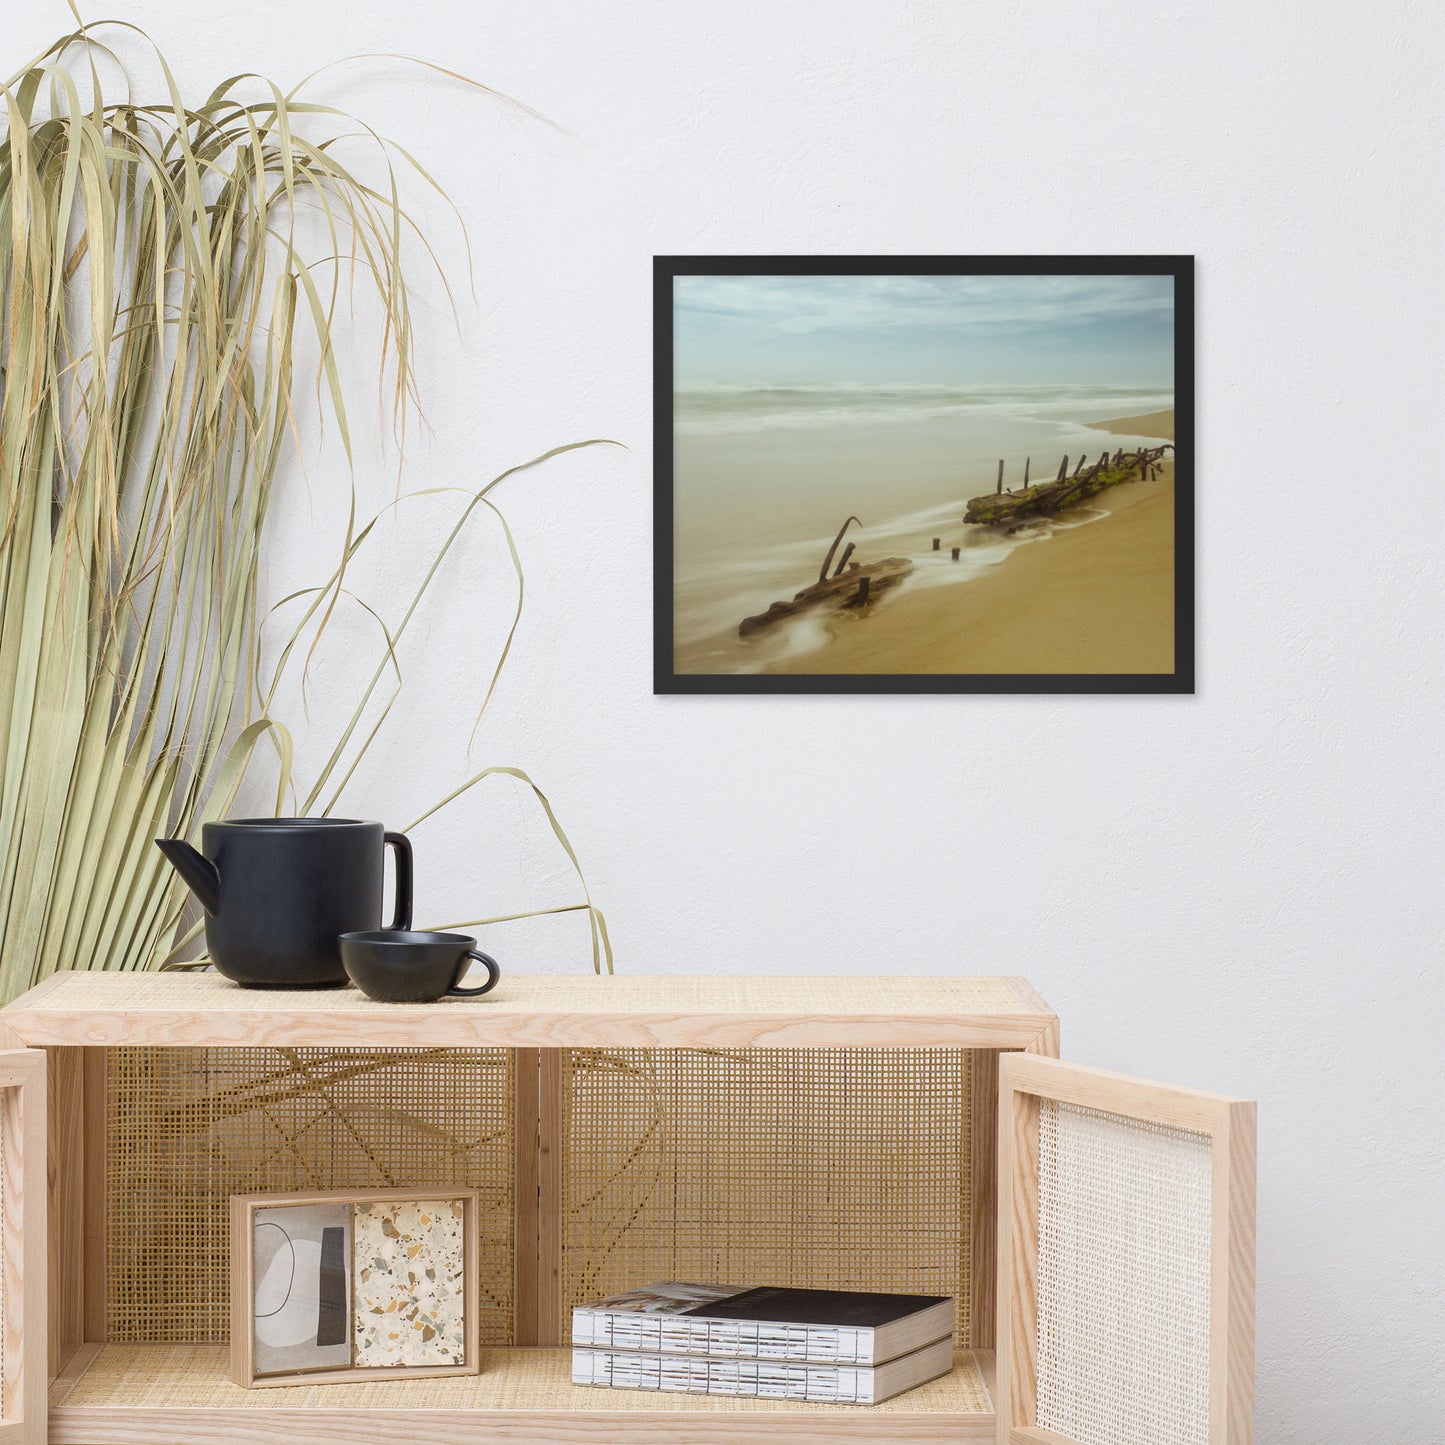 Misty Shipwreck Coastal Landscape Framed Photo Paper Wall Art Prints